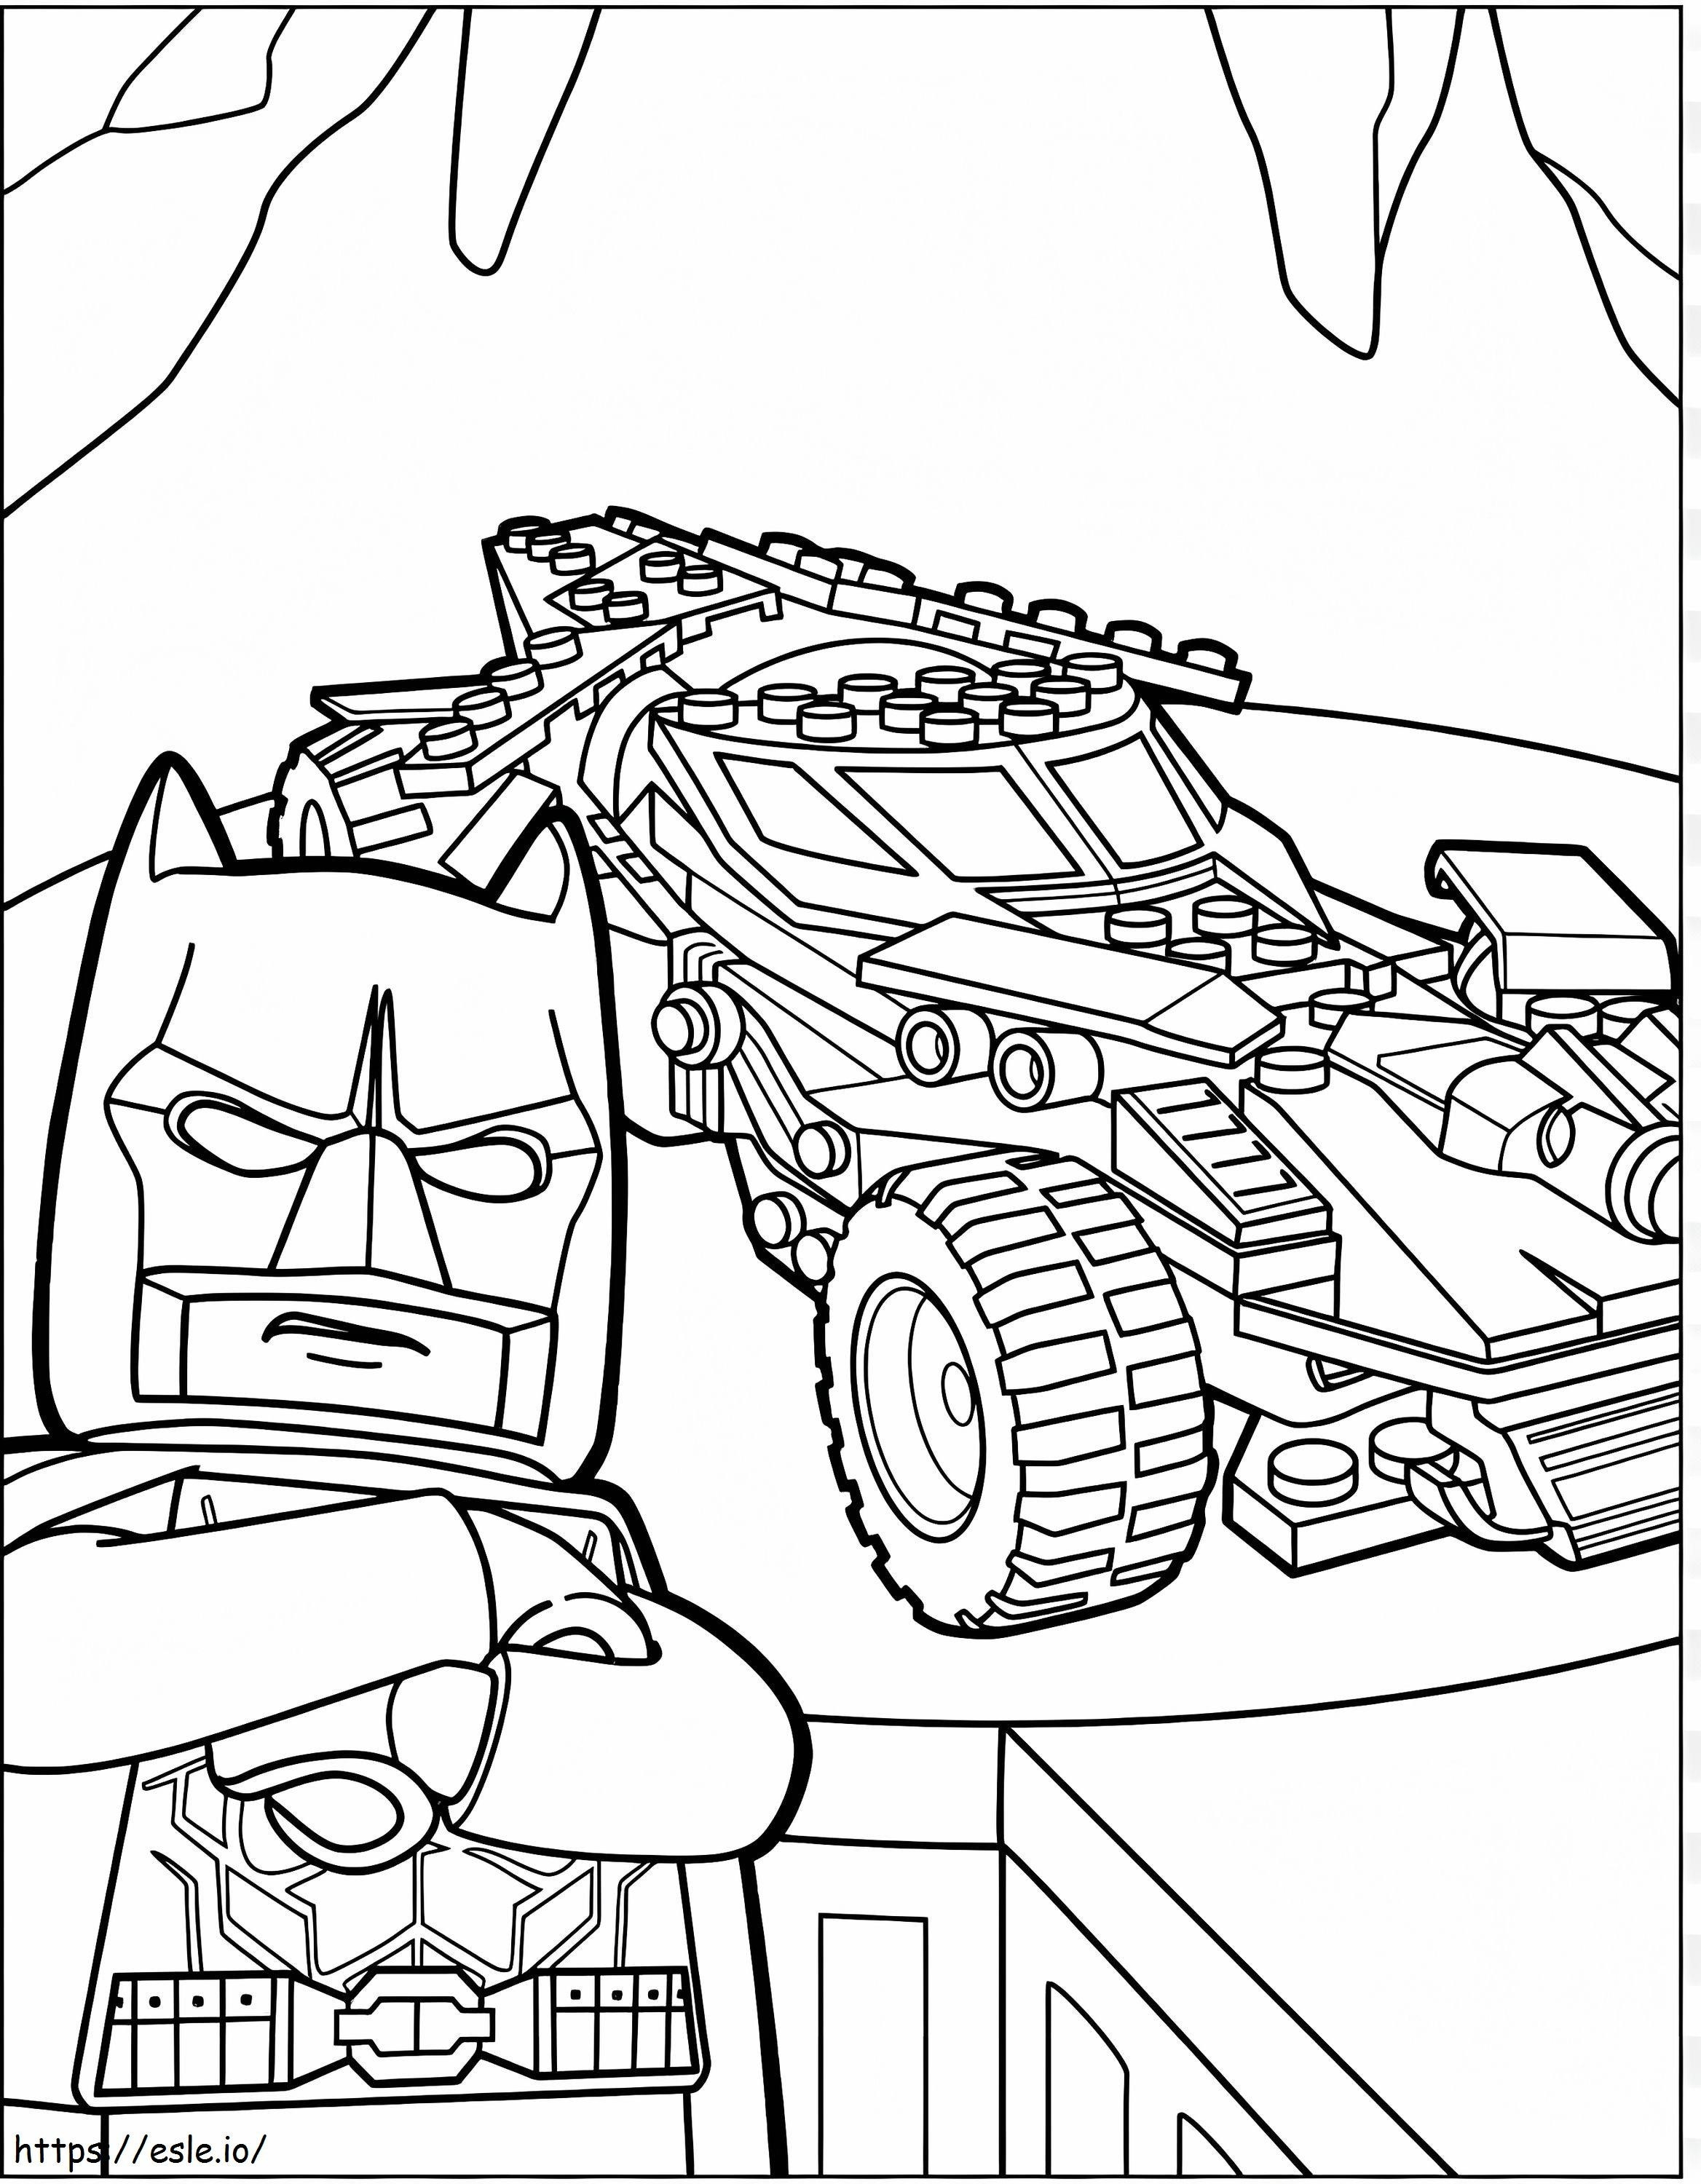 Lego Batman In Batcave coloring page